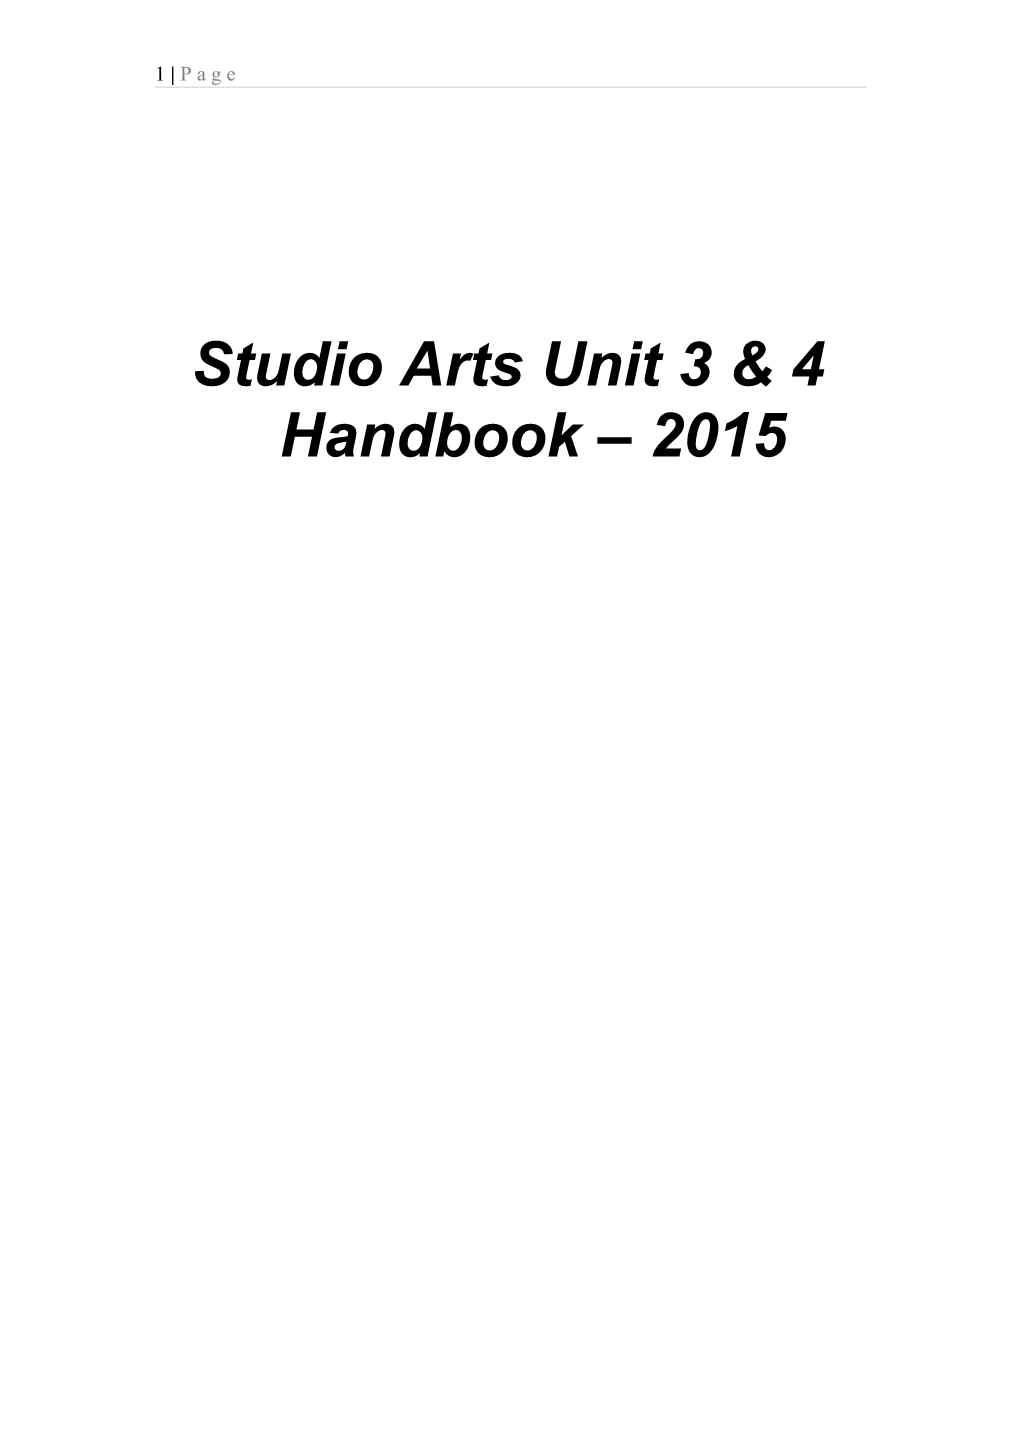 Studio Arts Unit 3 & 4 2011